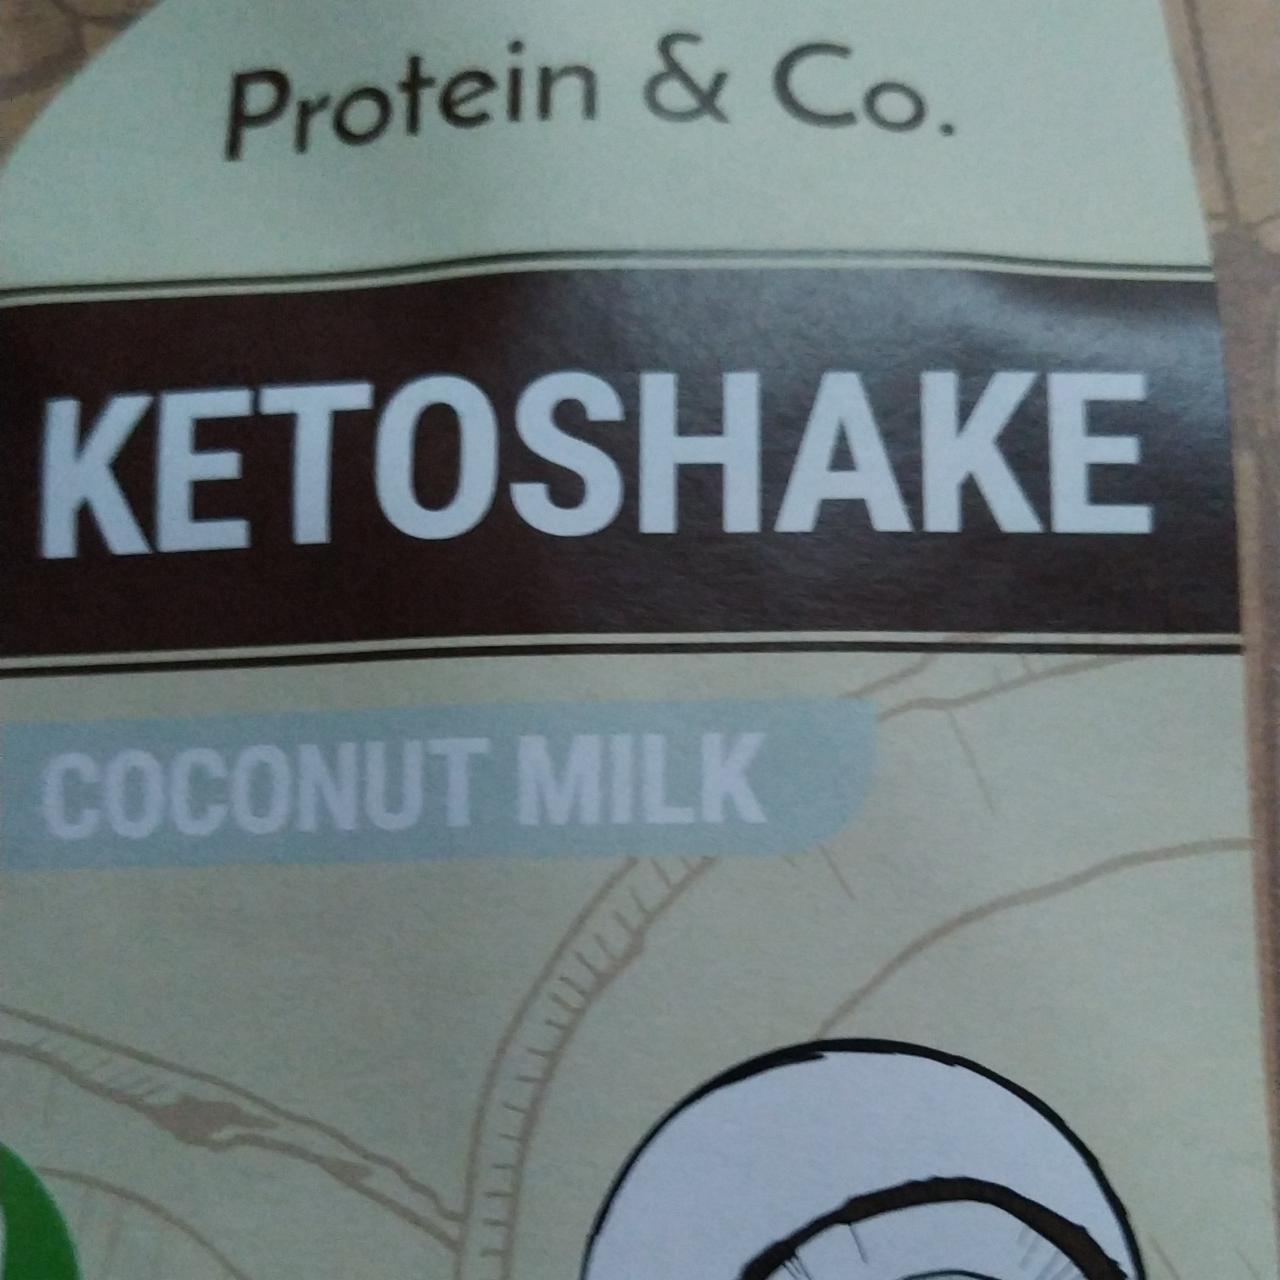 Fotografie - Ketoshake coconut milk Protein & Co.